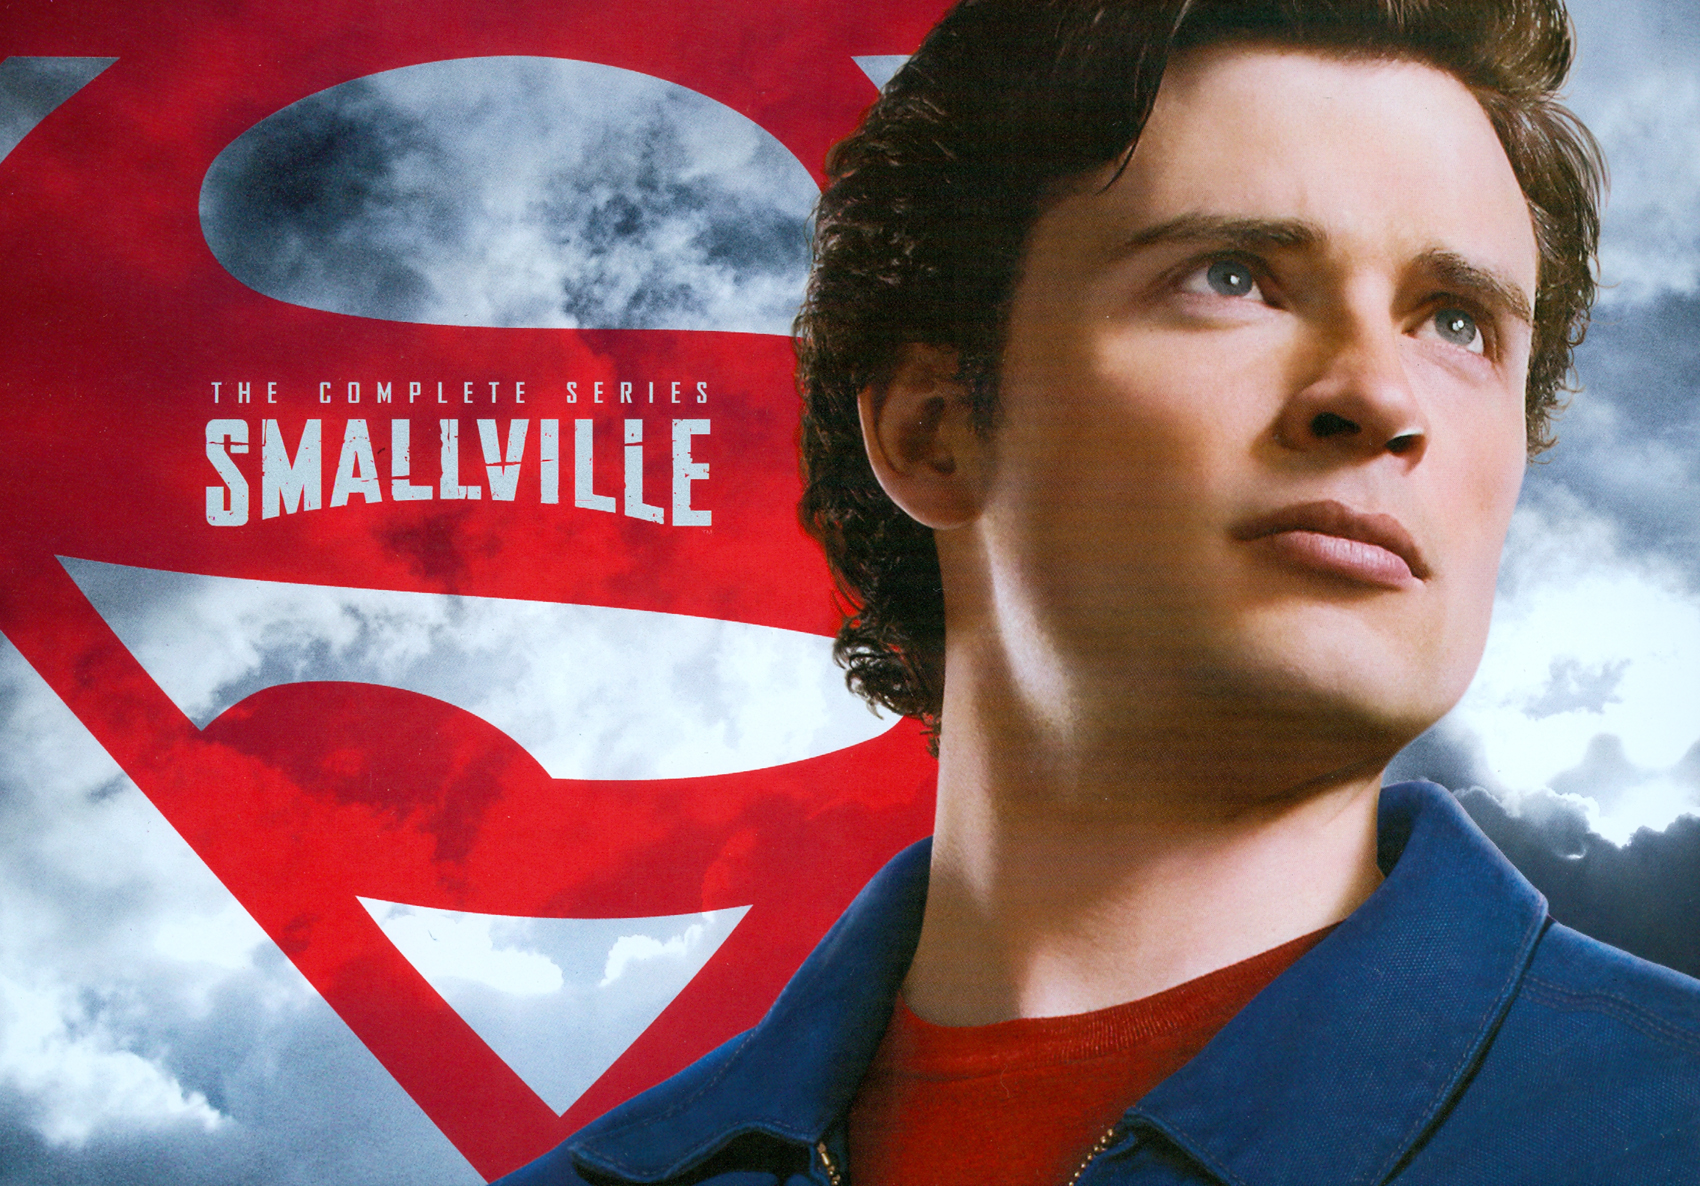 Smallville 'Smallville' Cast: